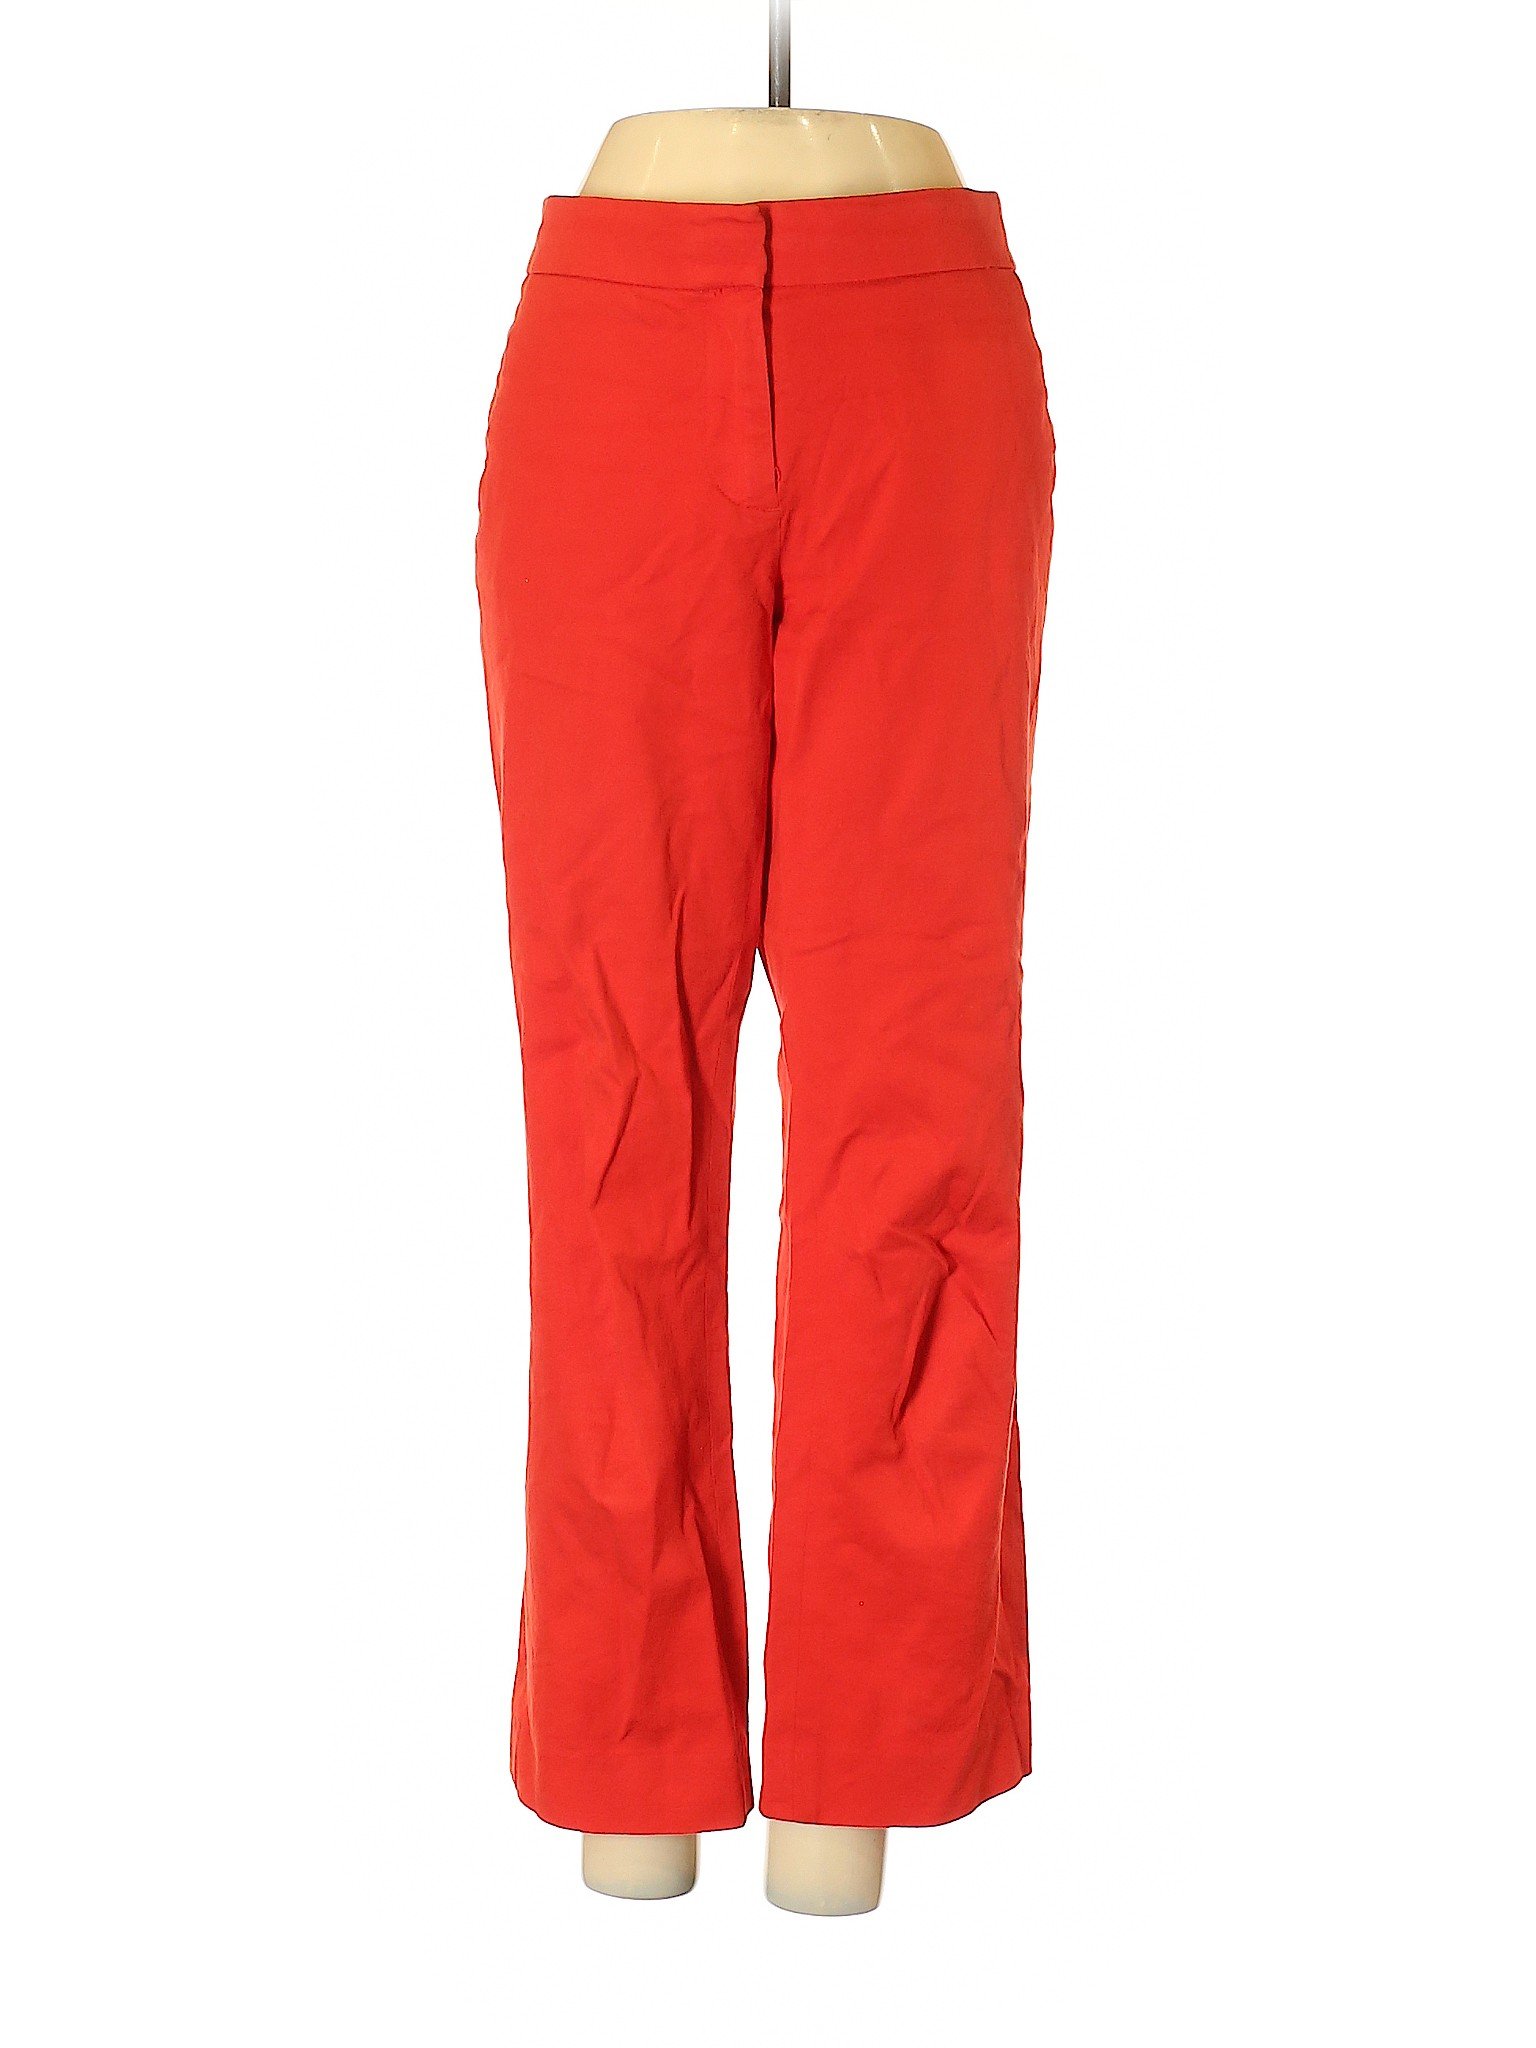 Unbranded Women Red Dress Pants S | eBay